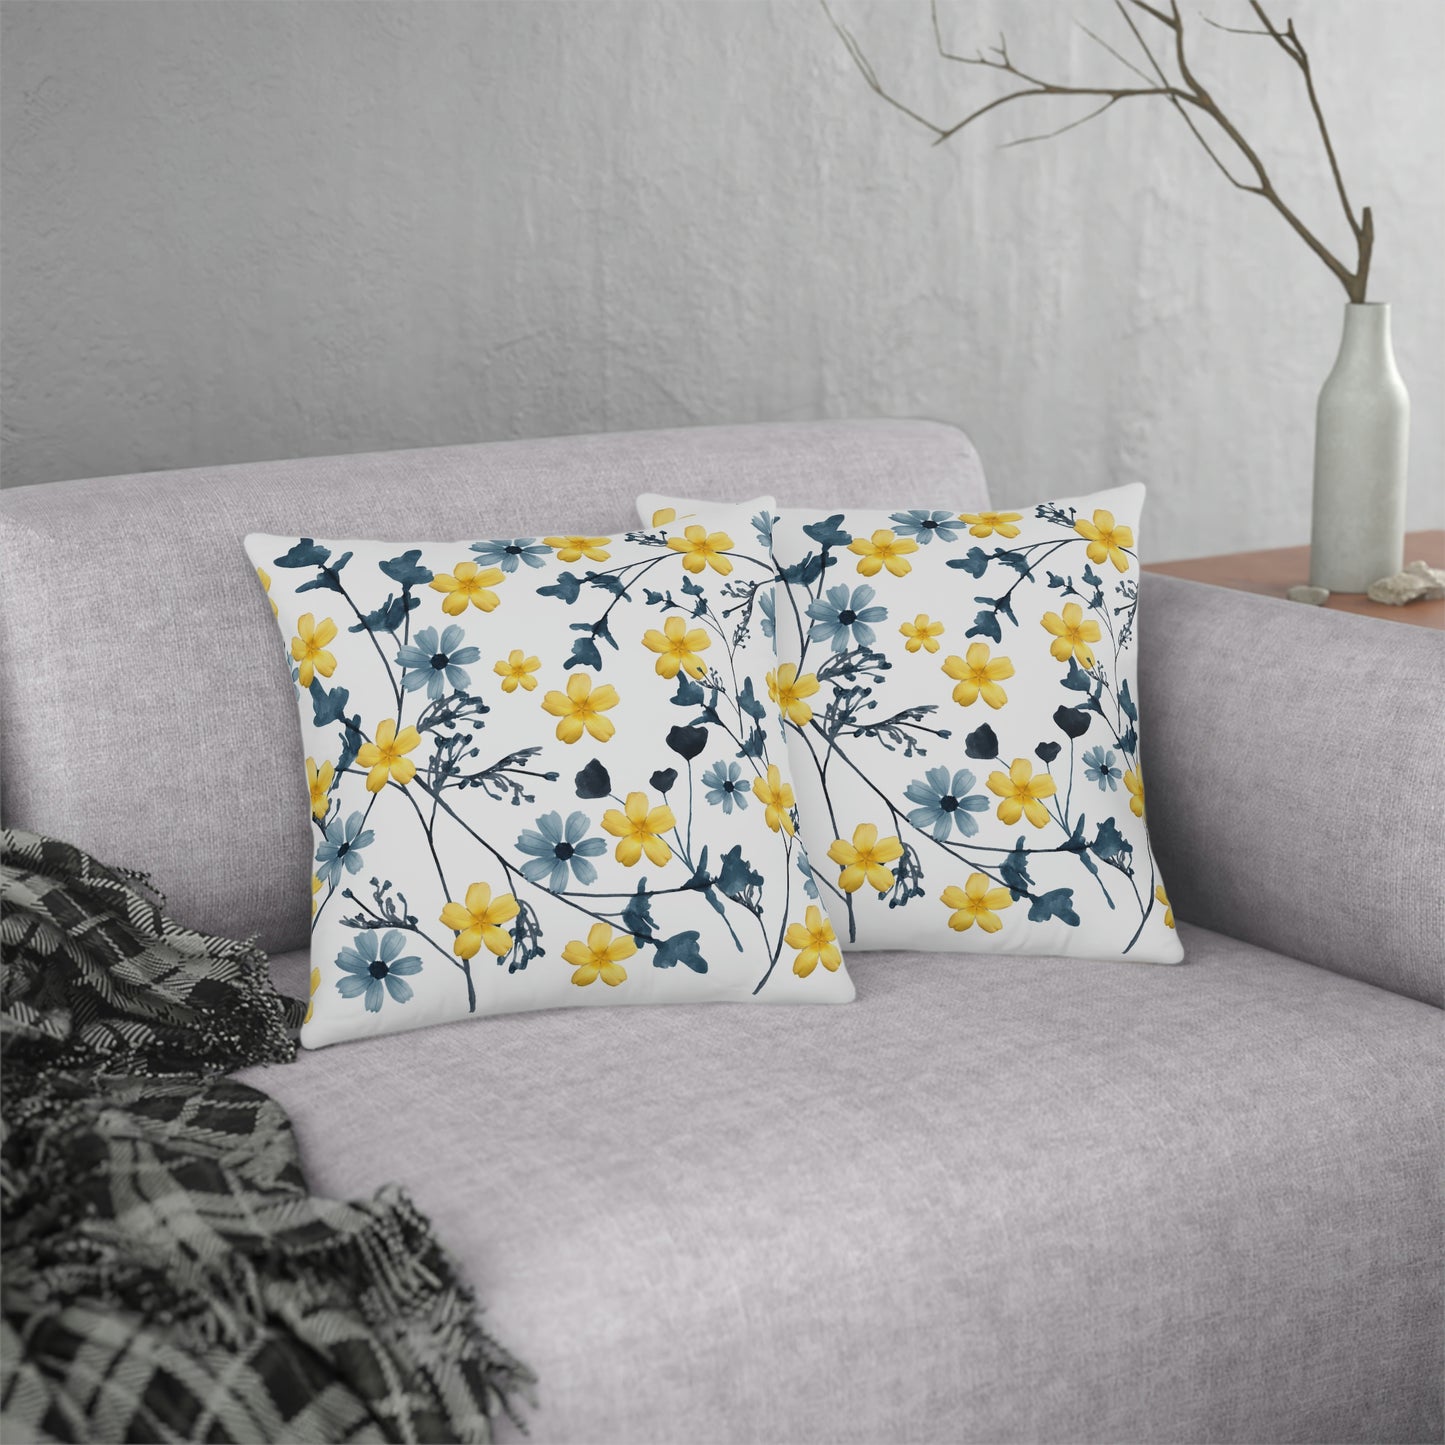 Floral Patio Pillow / Outdoor Waterproof Pillow